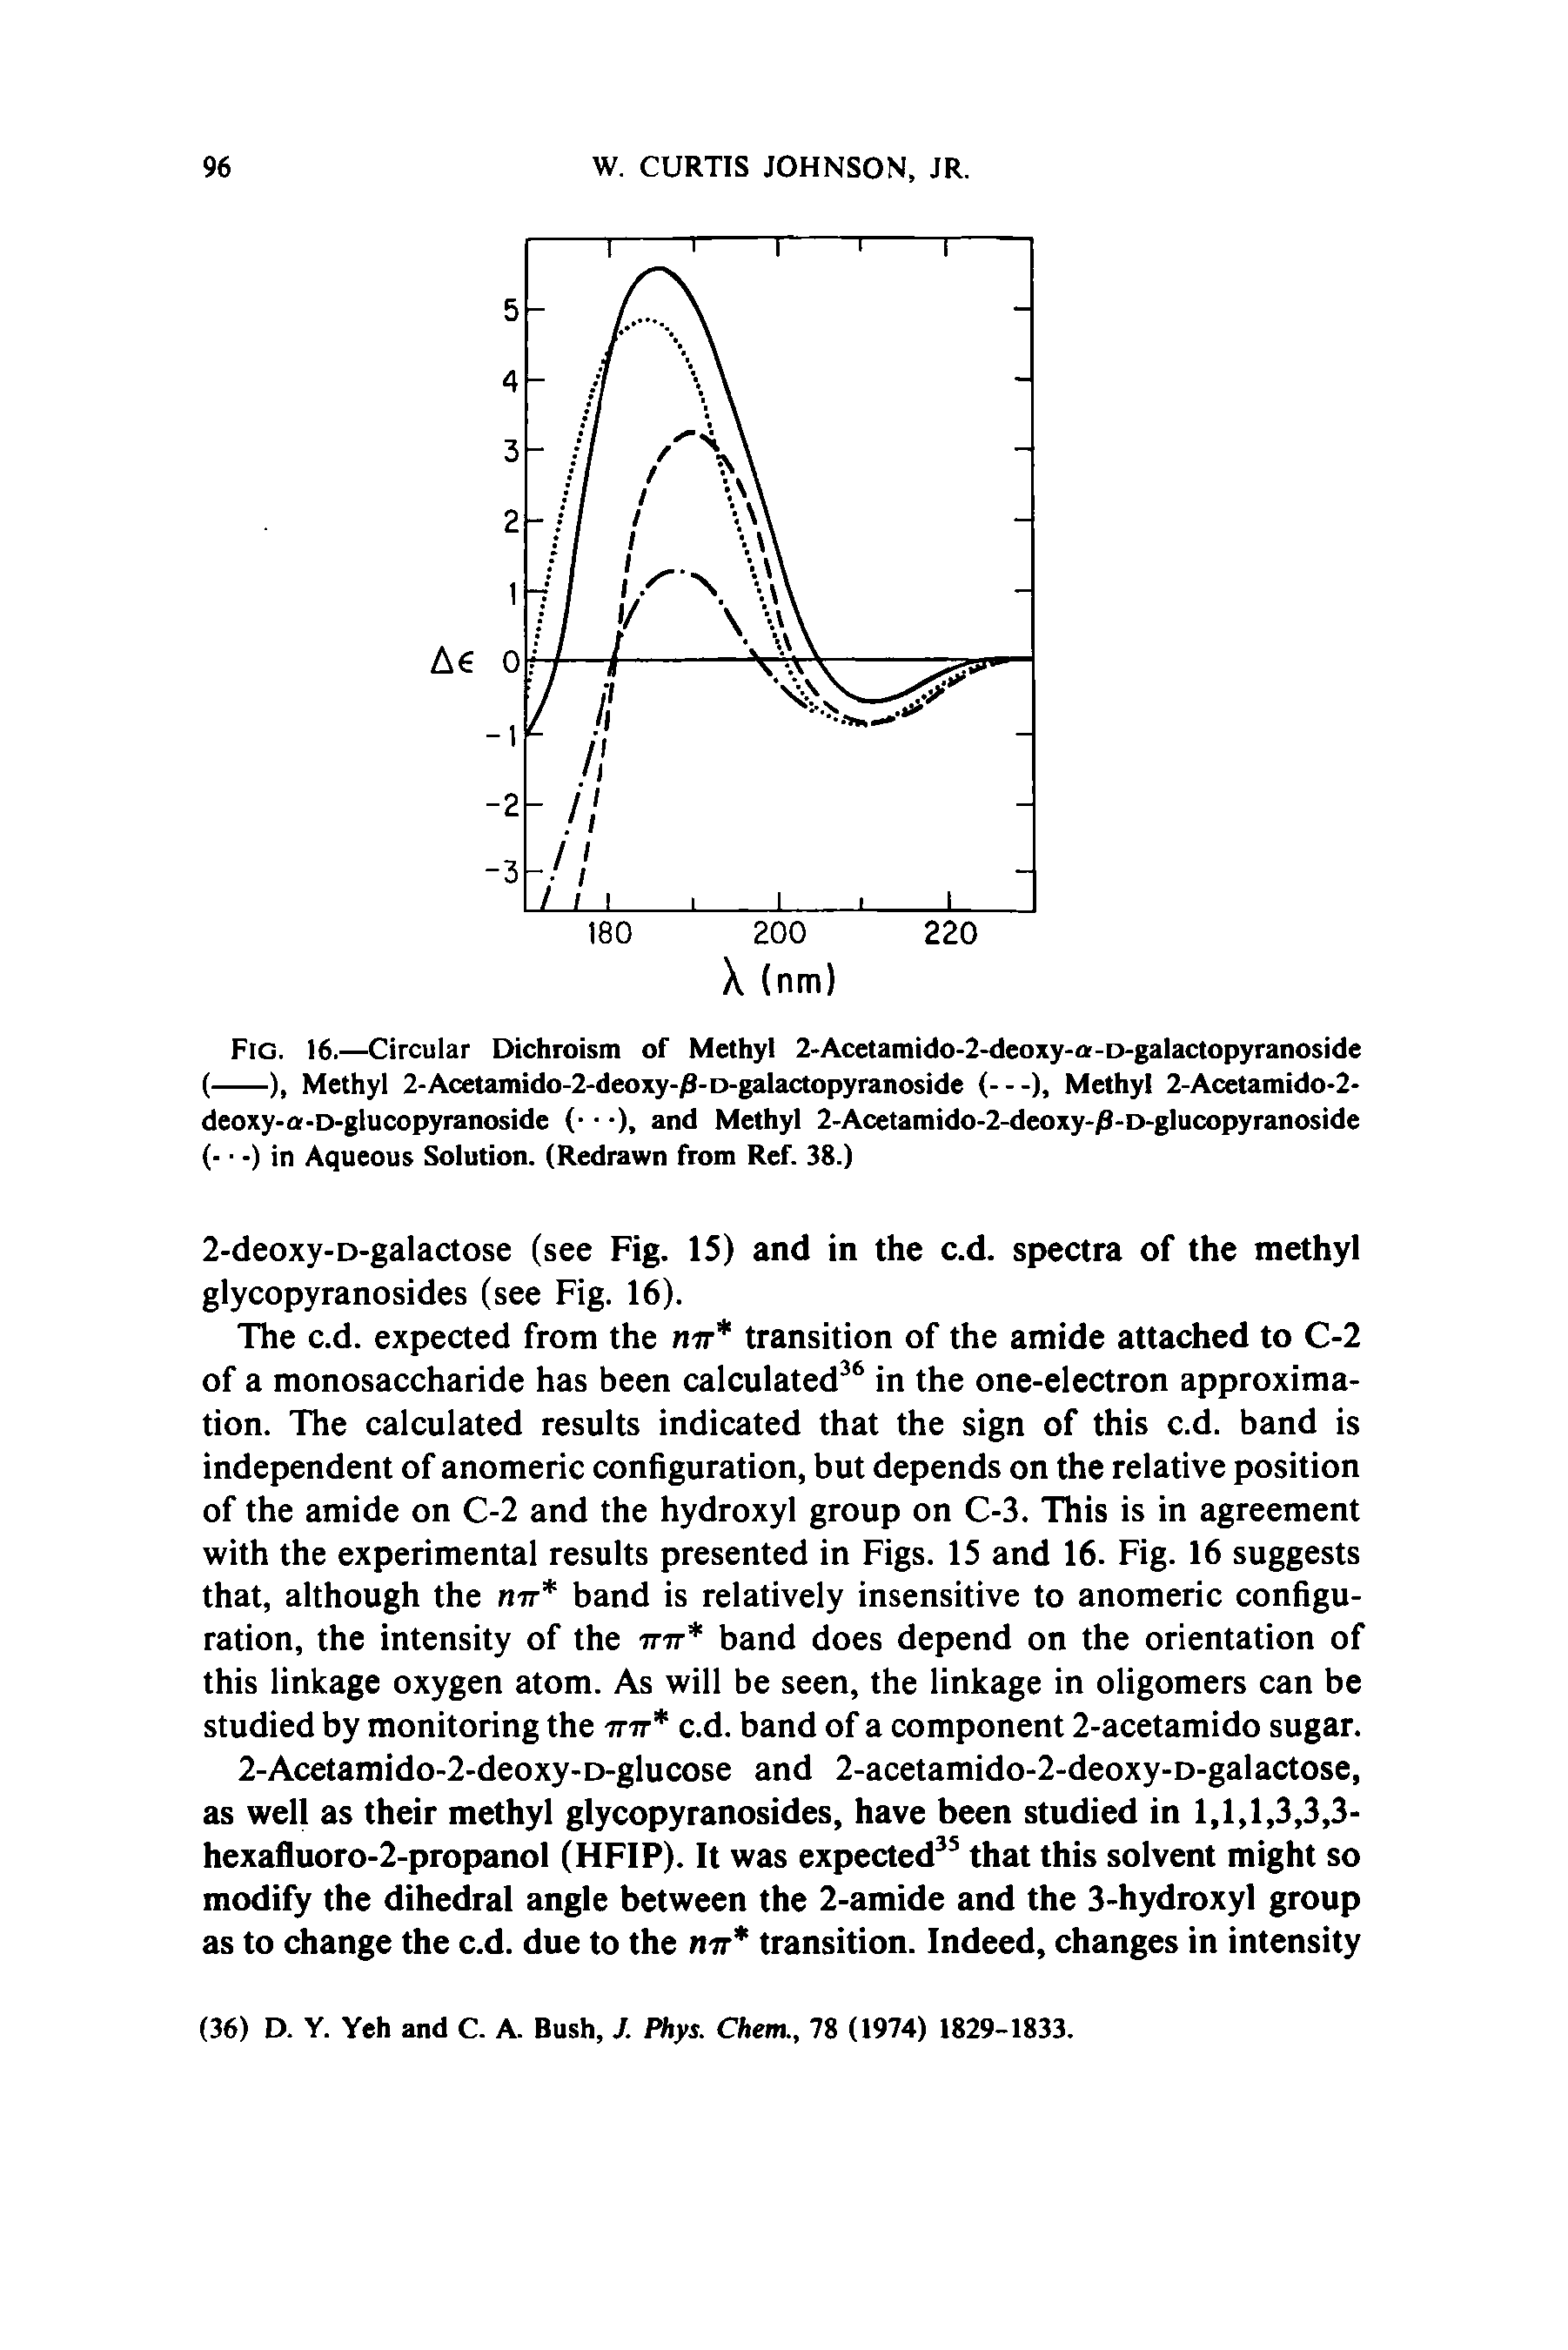 Fig. 16.—Circular Dichroism of Methyl 2-Acetamido-2-deoxy-a-D-galactopyranoside...